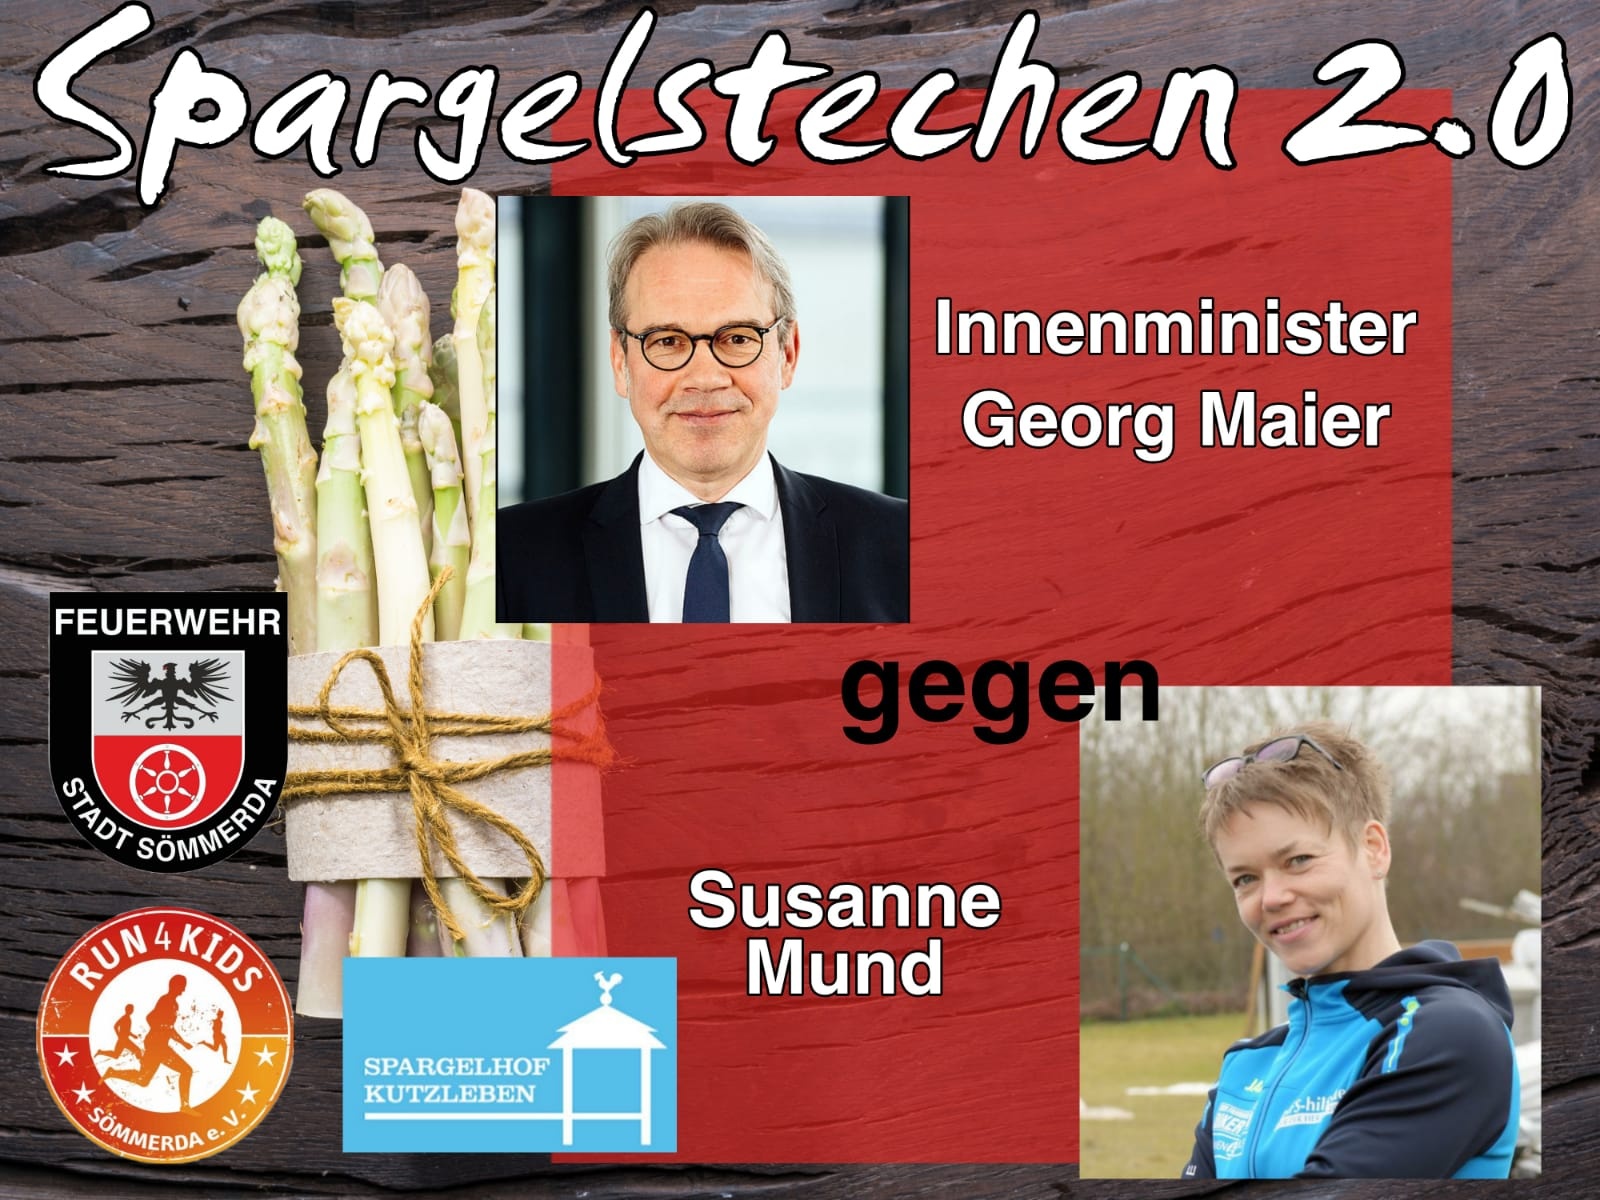 Innenminister Georg Maier tritt gegen Susanne Mund im Wett-Spargelstechen an